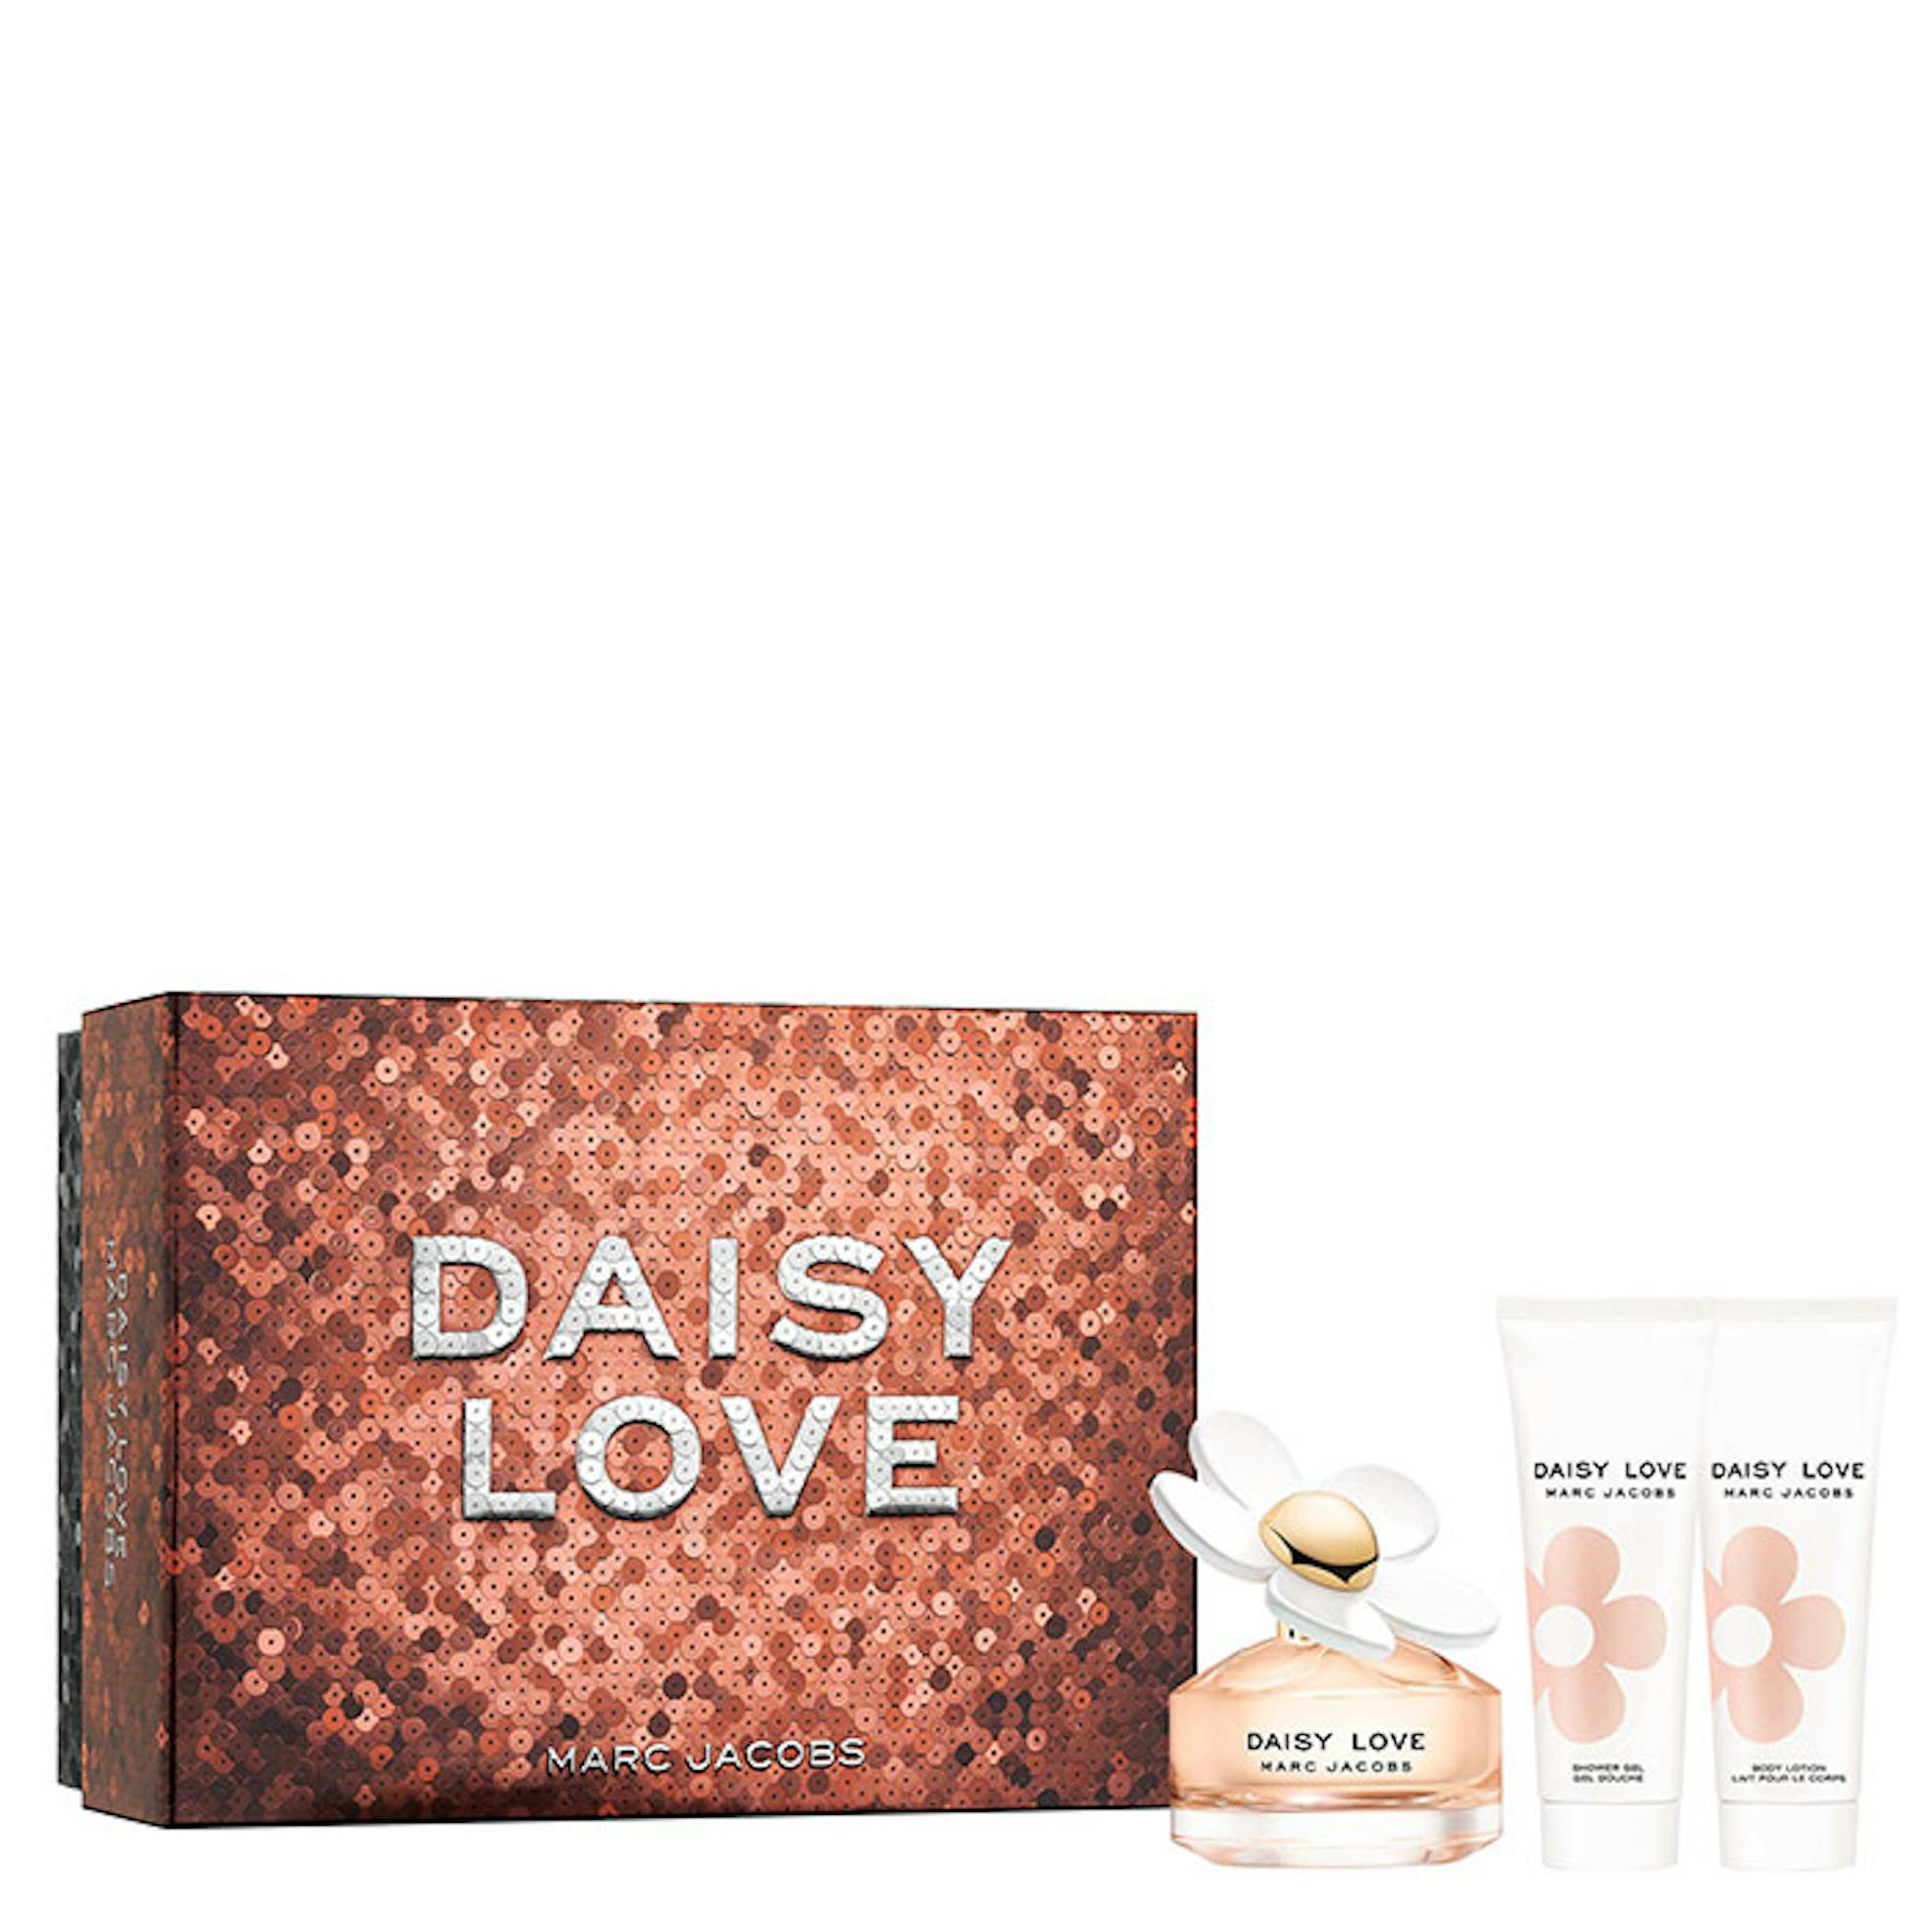 Daisy Love Perfume by Marc Jacobs 1.6 fl oz 50ml New In Box Eau So